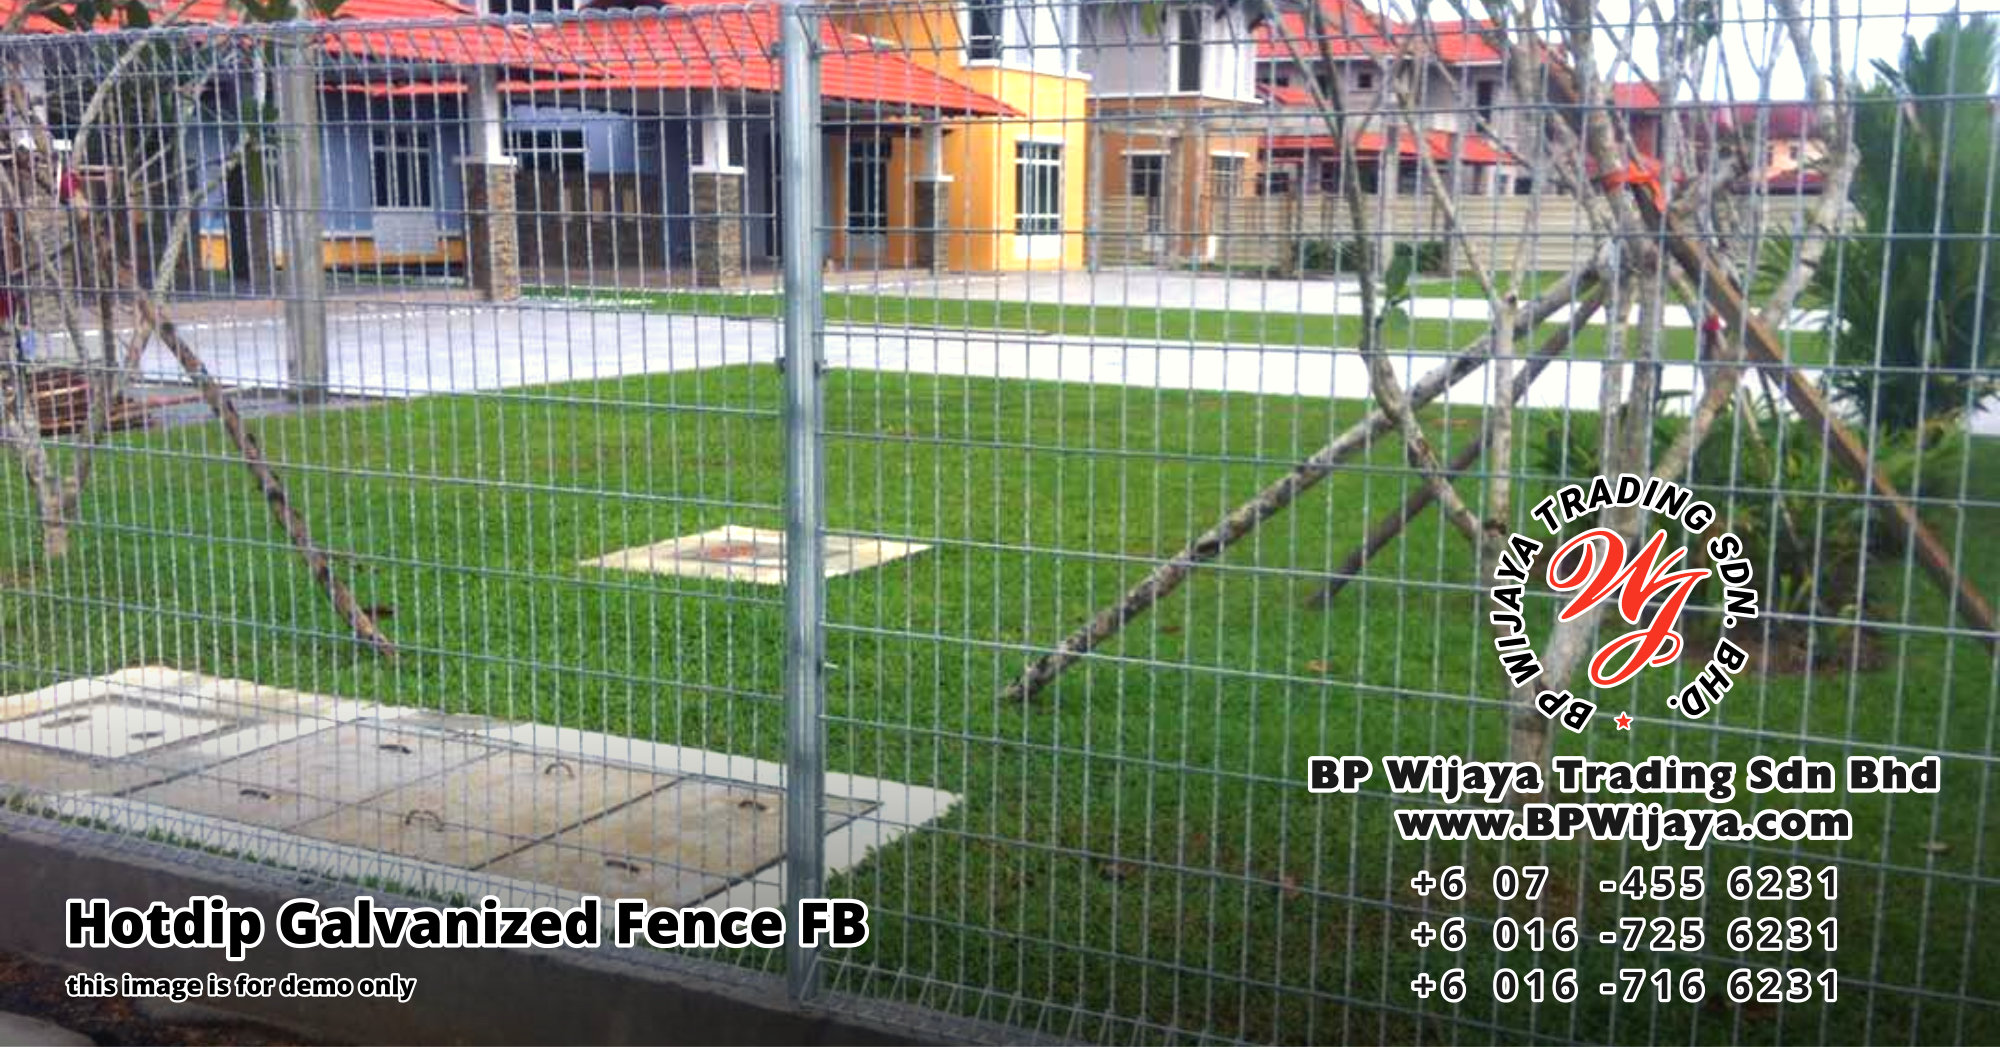 BP Wijaya Security Fence Manufacturer Malaysia Hotdip Galvanized Fence FB Security Fence Kuala Lumpur Pahang Johor Fence Malaysia A00